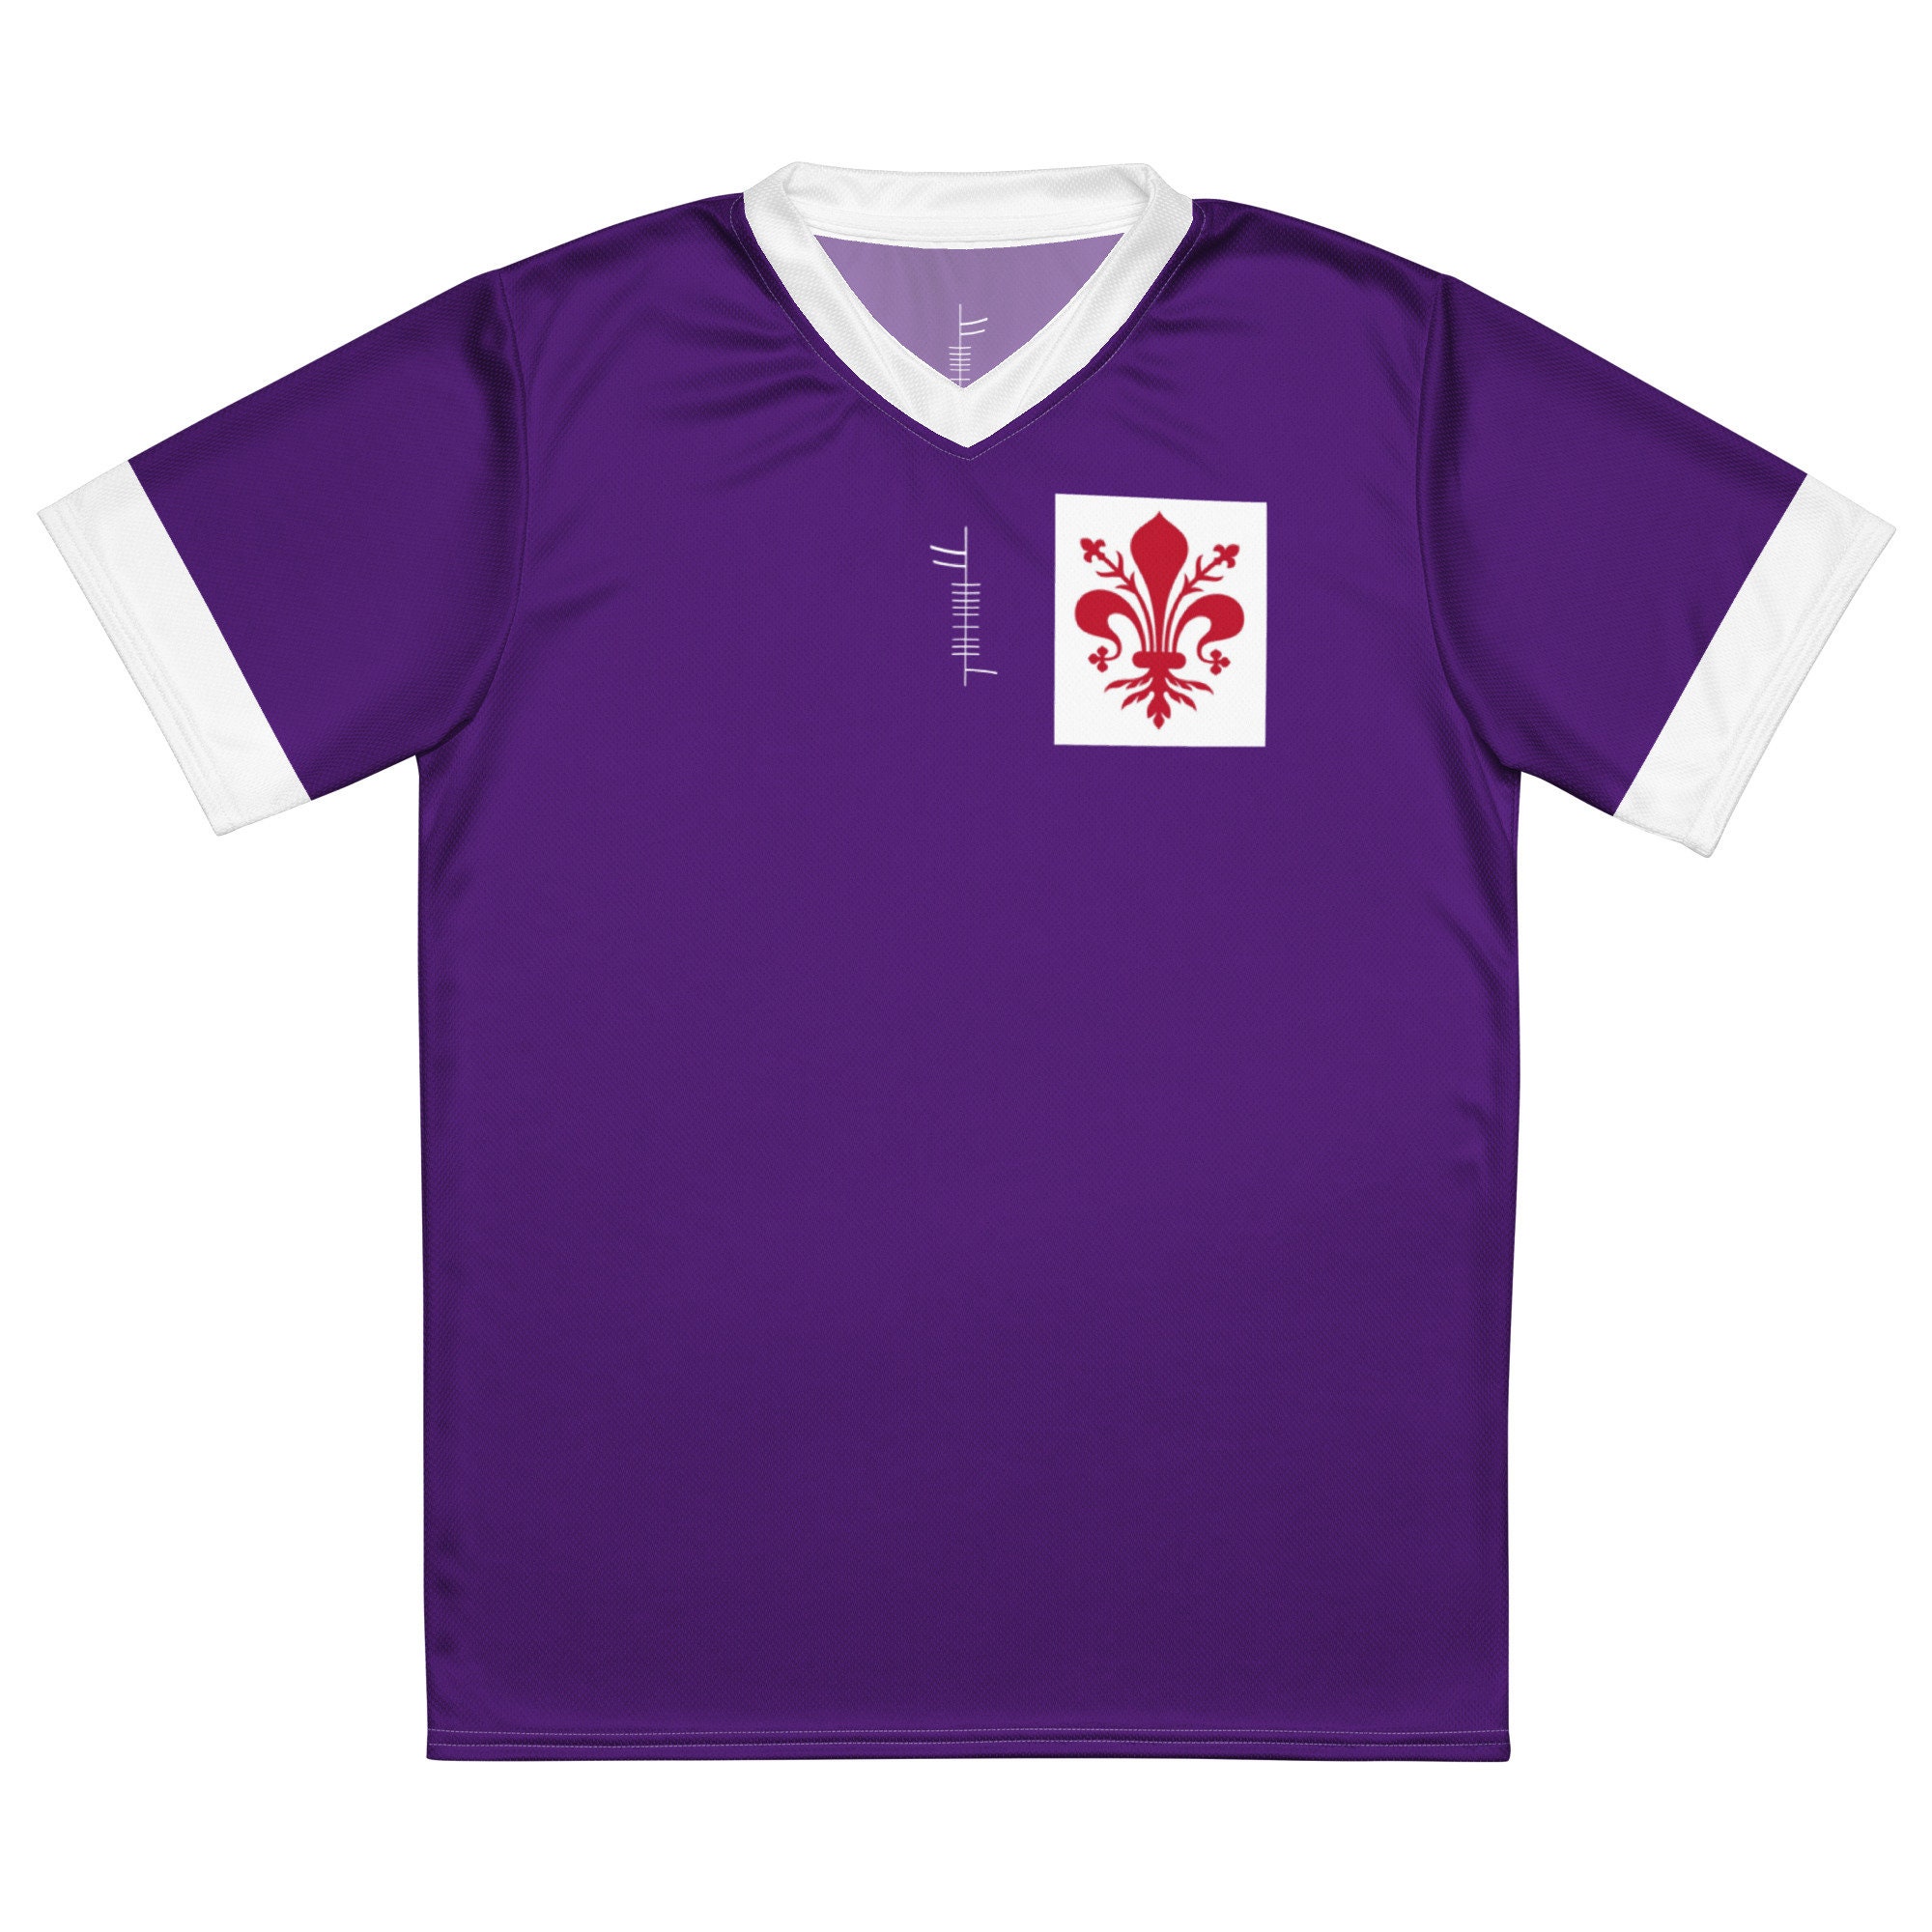 Acf Fiorentina Logo Vector Art & Graphics